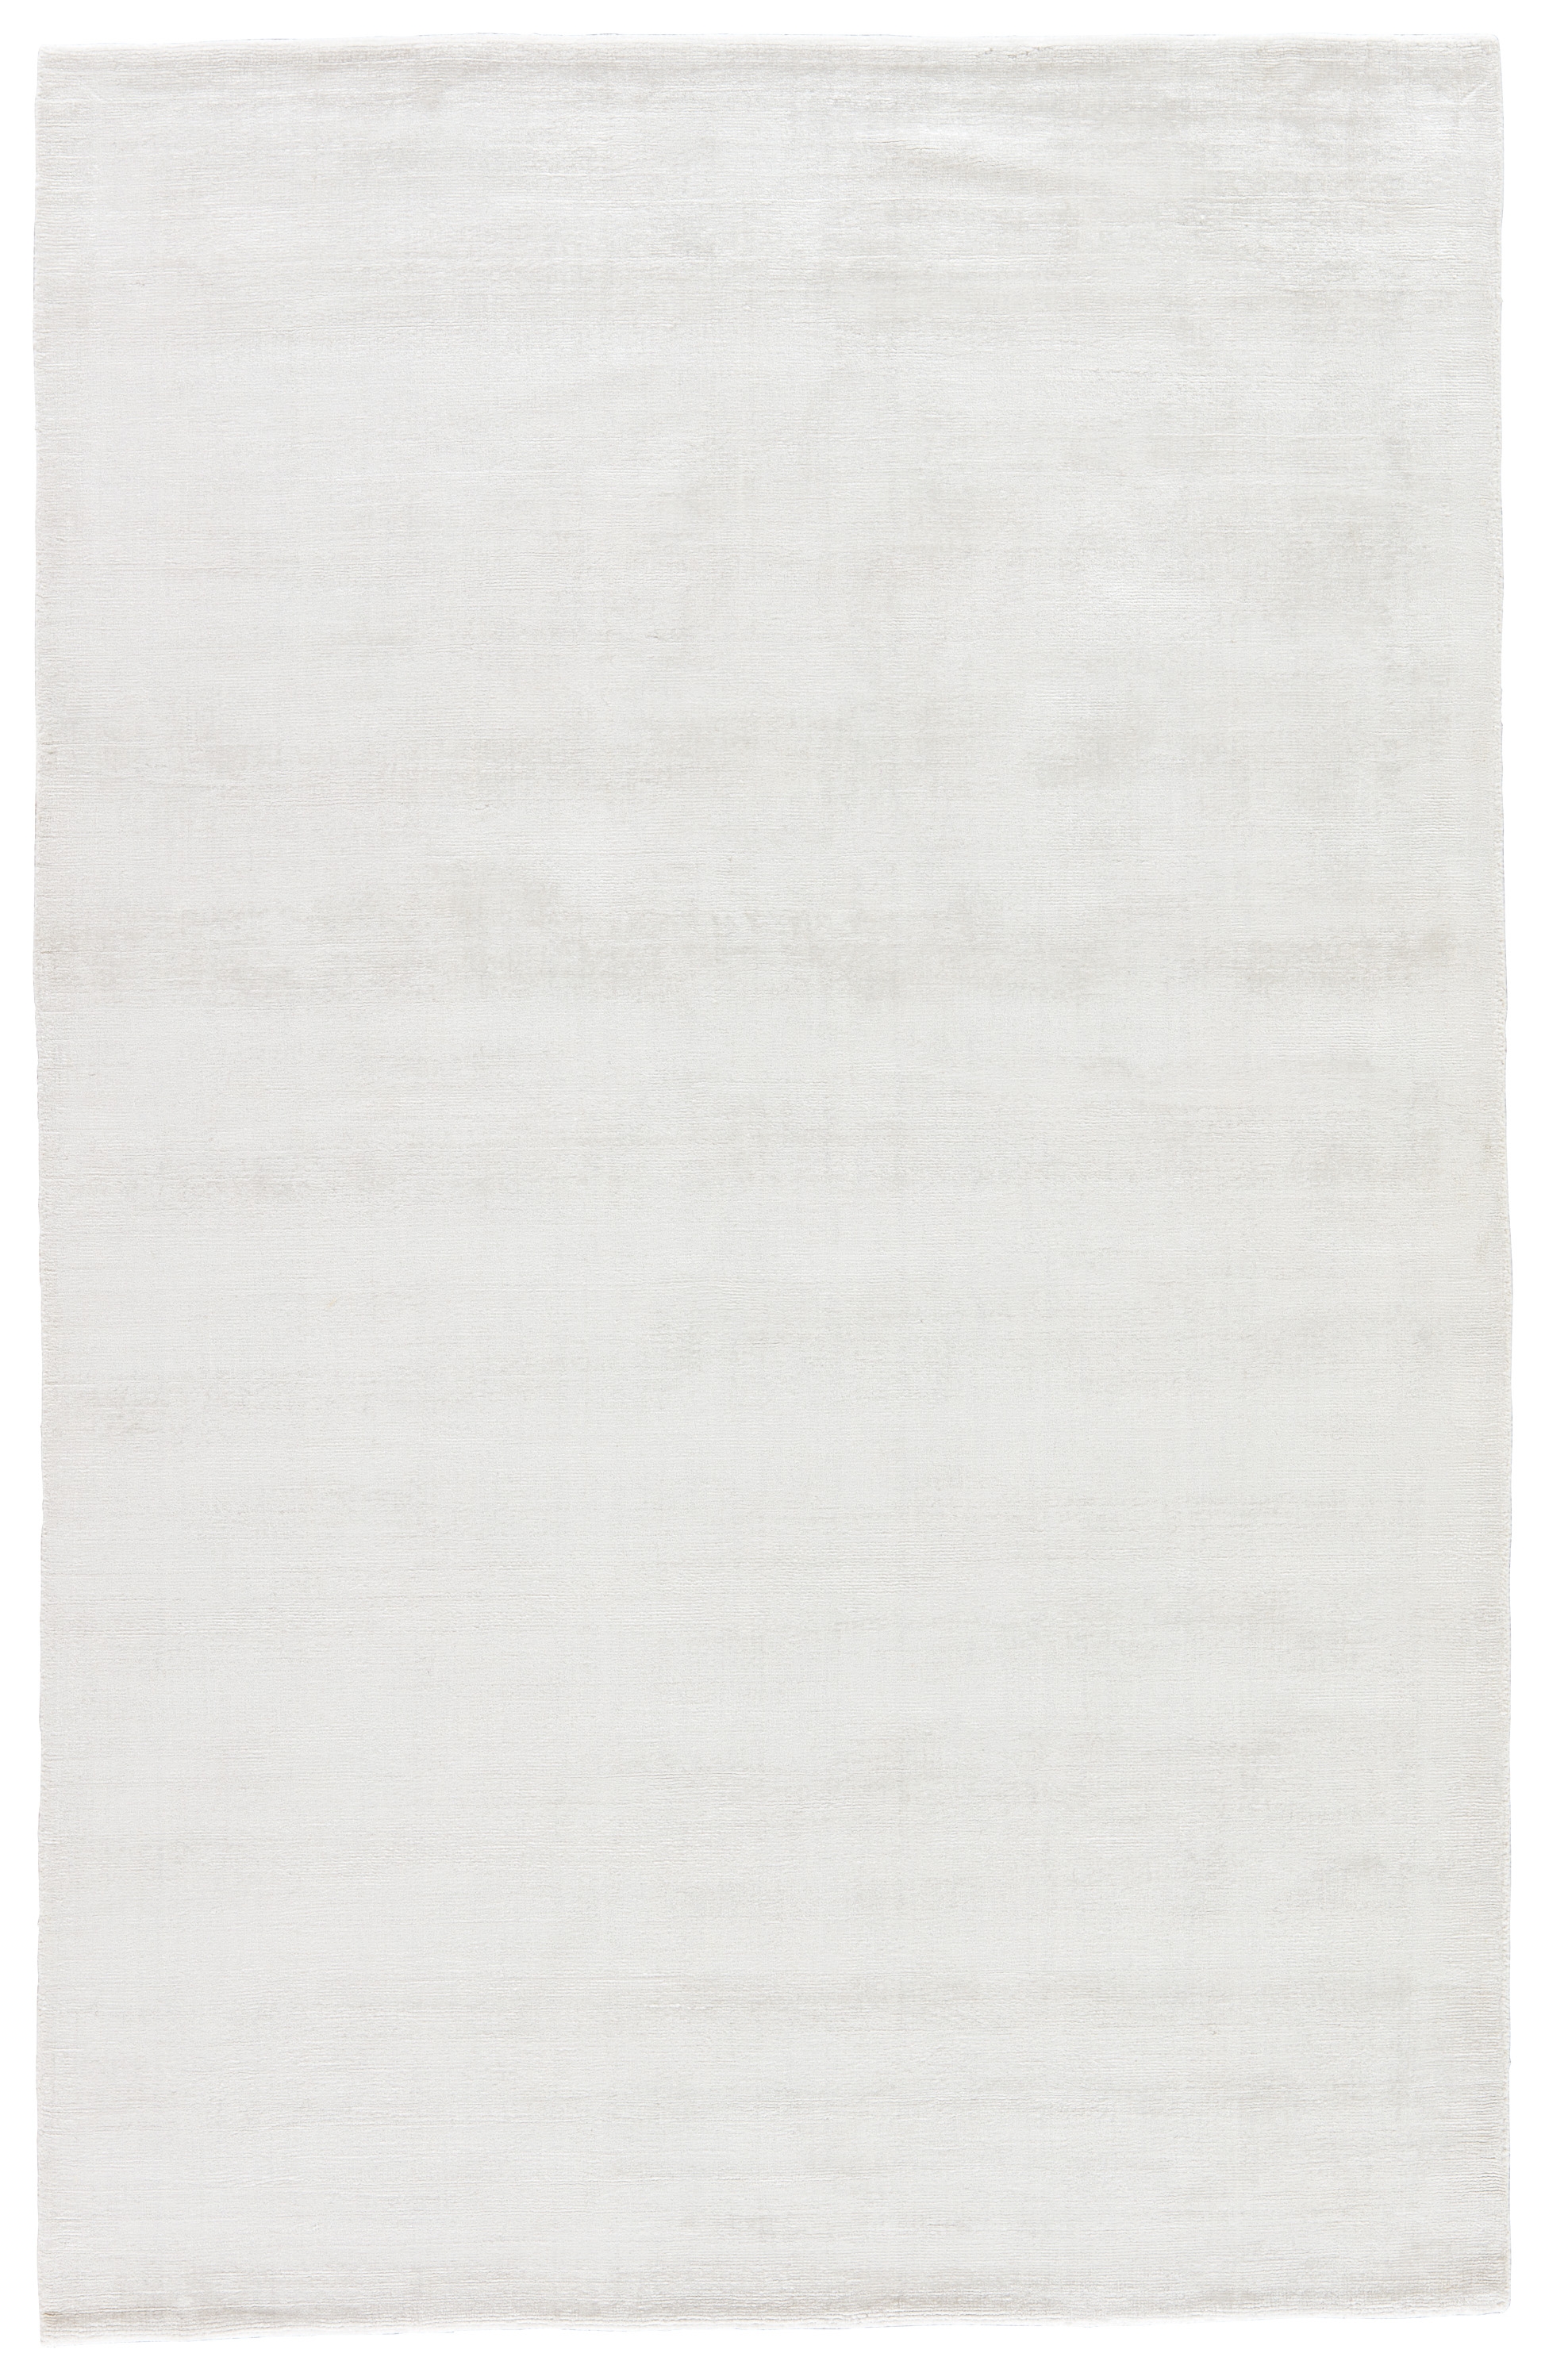 Yasmin Handloomed Area Rug, White, 8' x 10' - Image 0